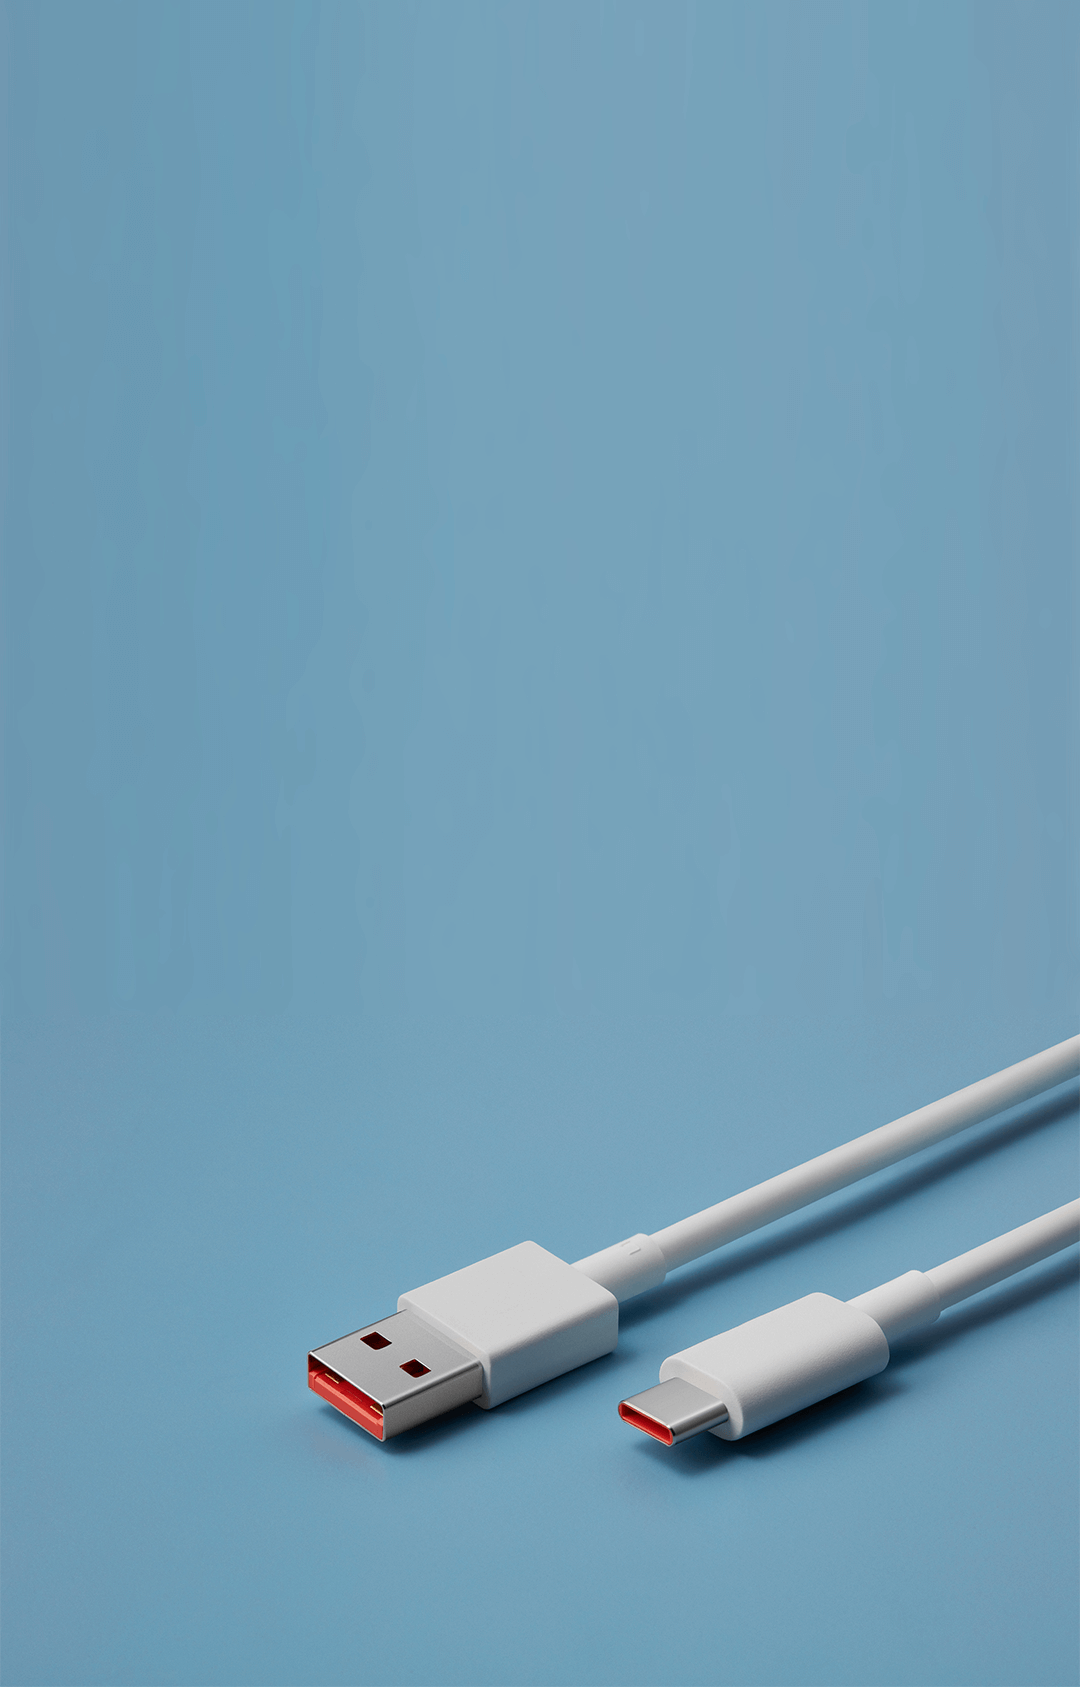 Xiaomi-Cable USB tipo C Original, cargador Turbo de teléfono, 6A, USBC, carga  rápida, Kabel Redmi